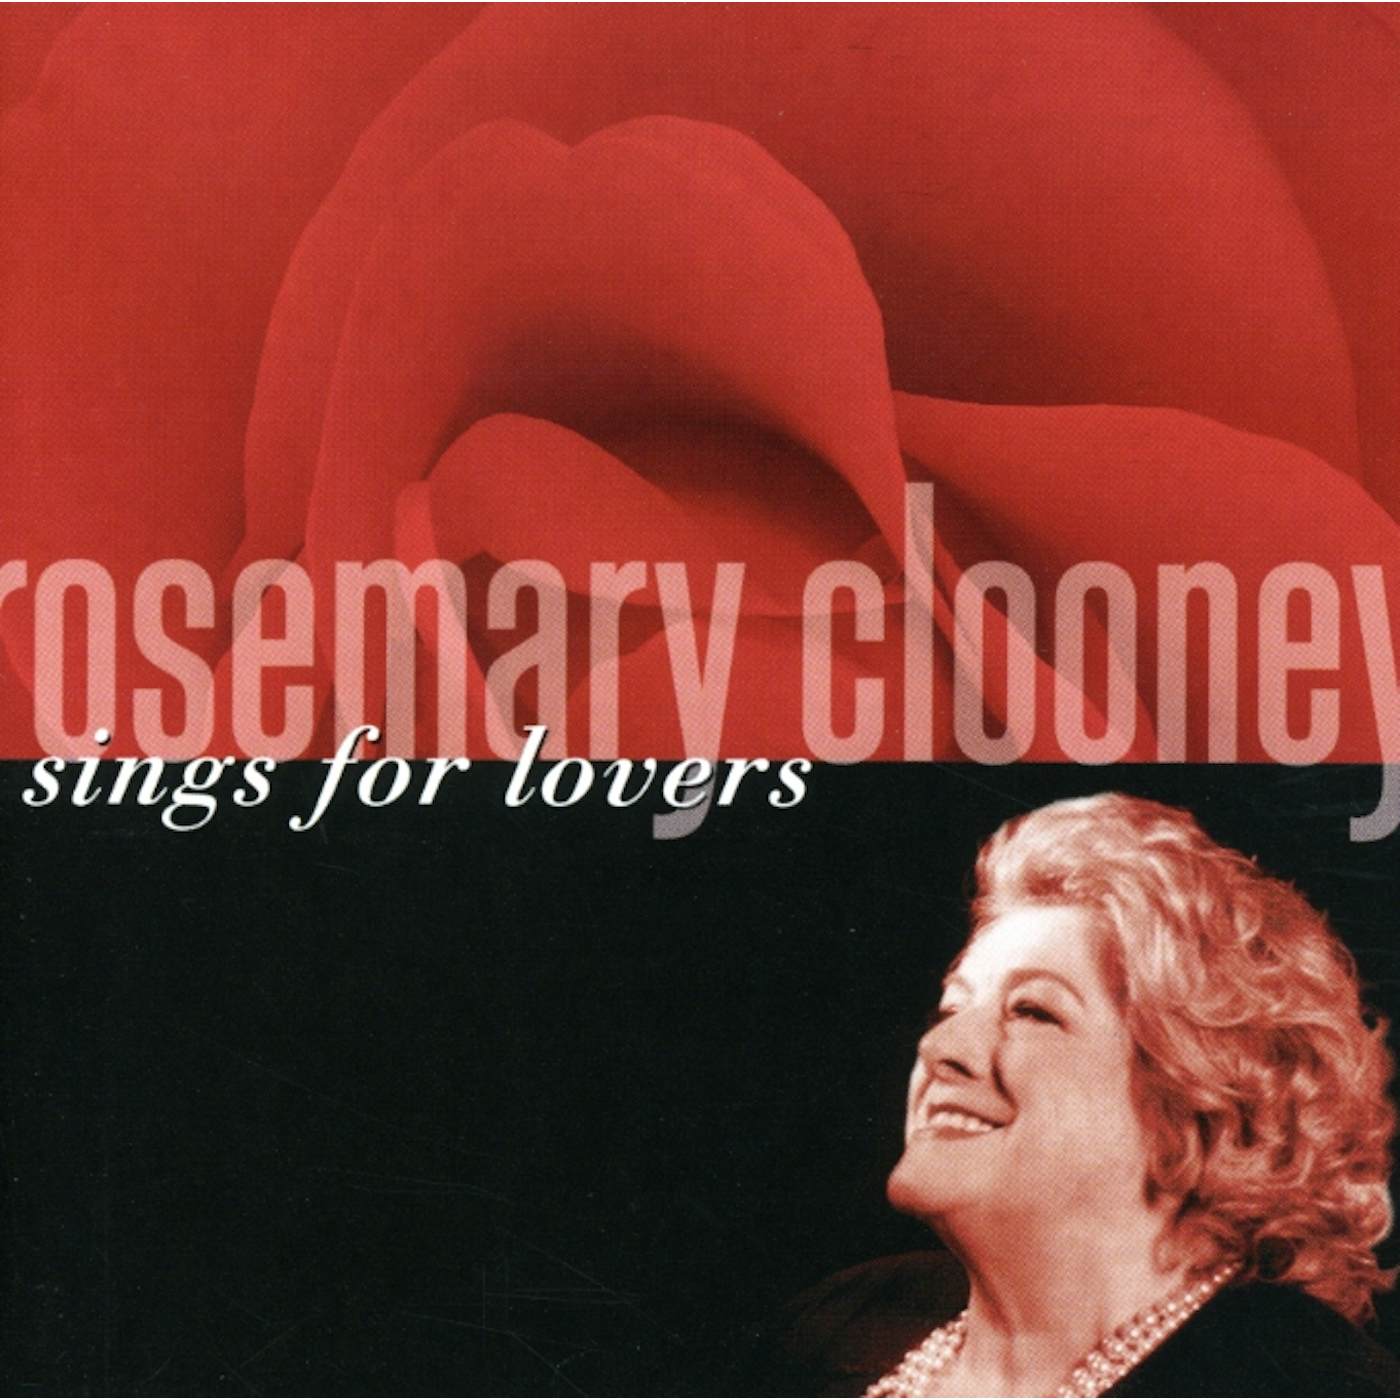 Rosemary Clooney SINGS FOR LOVERS CD